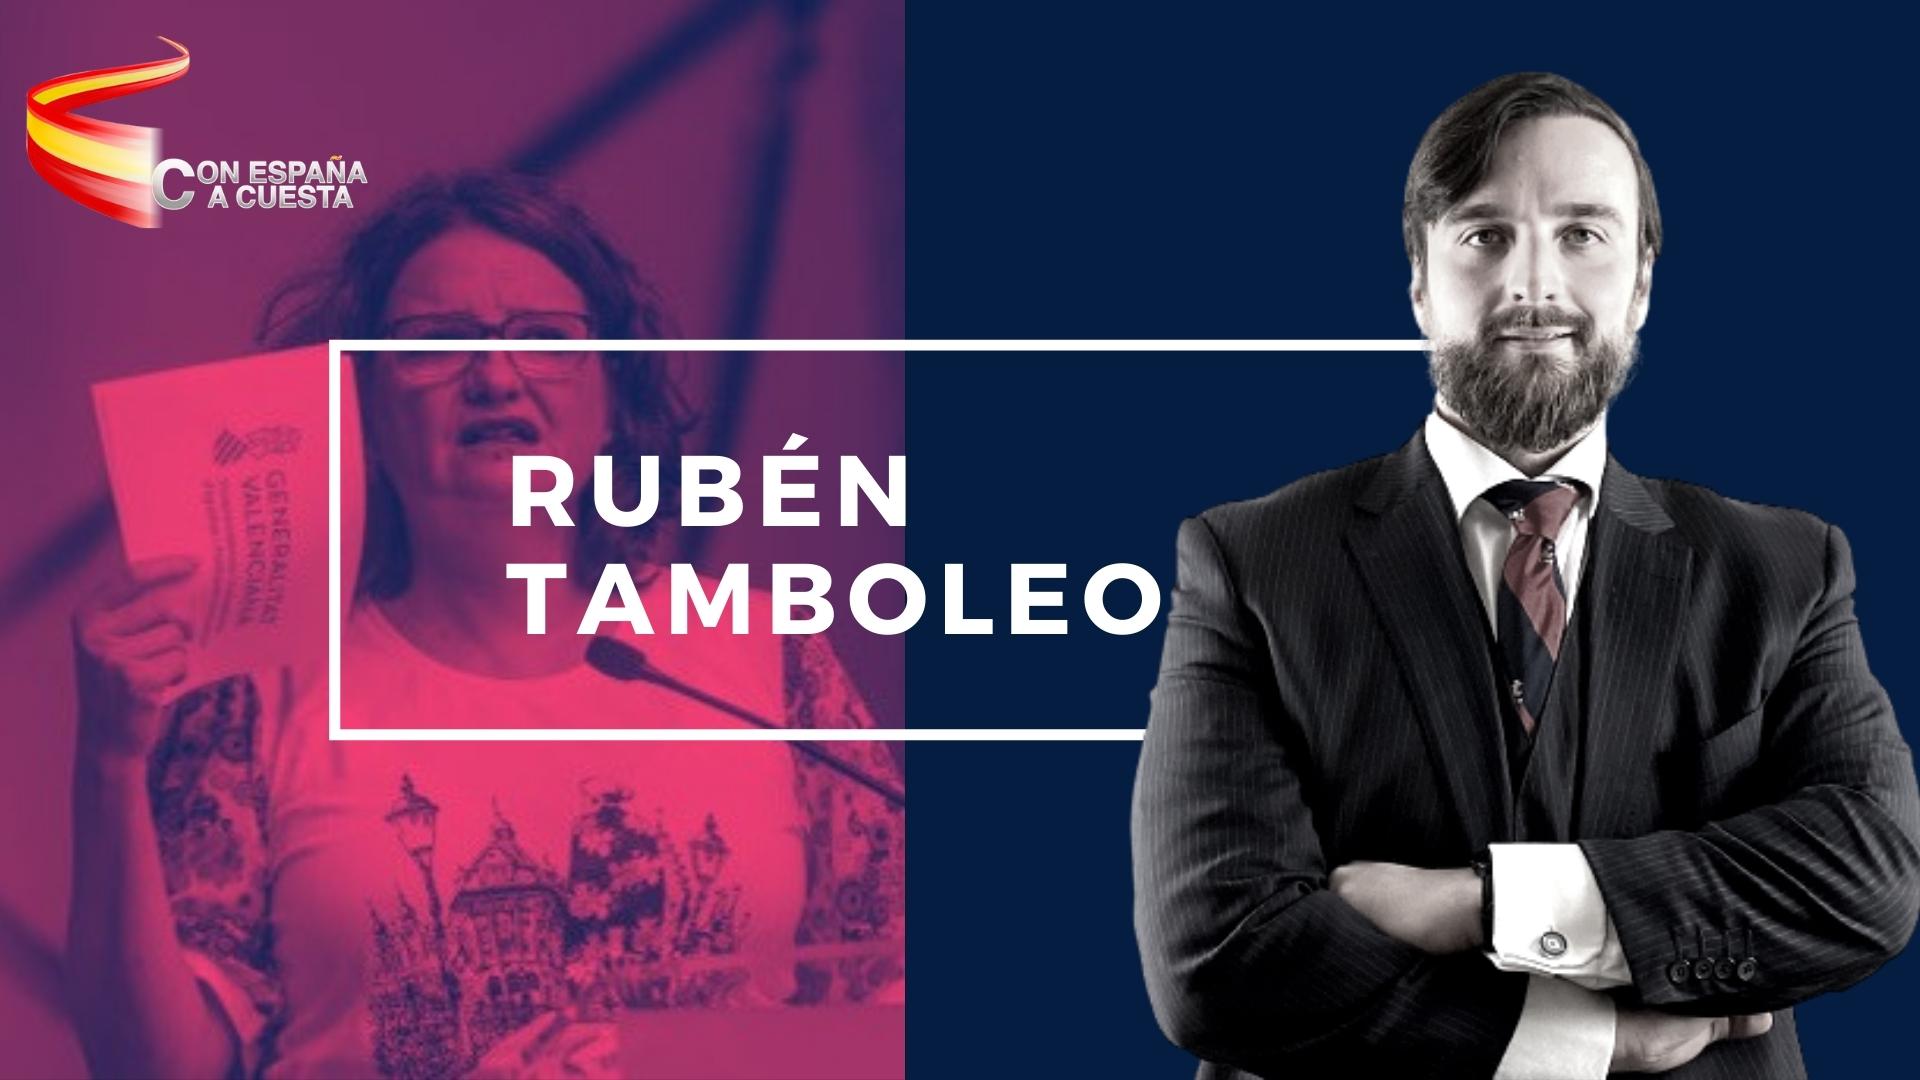 RUBÉN TAMBOLEO